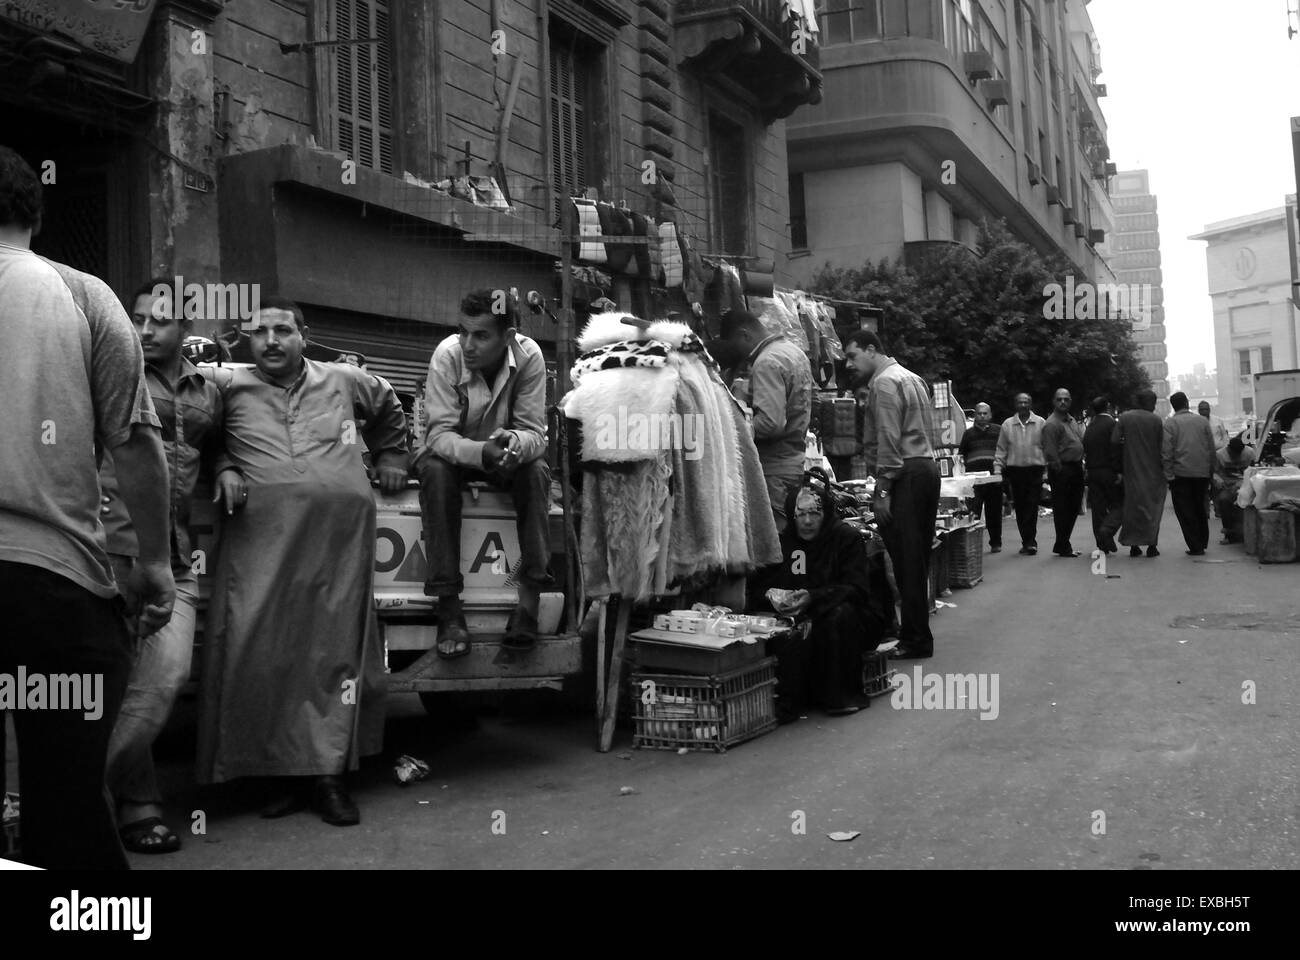 Cairo street scene Stock Photo